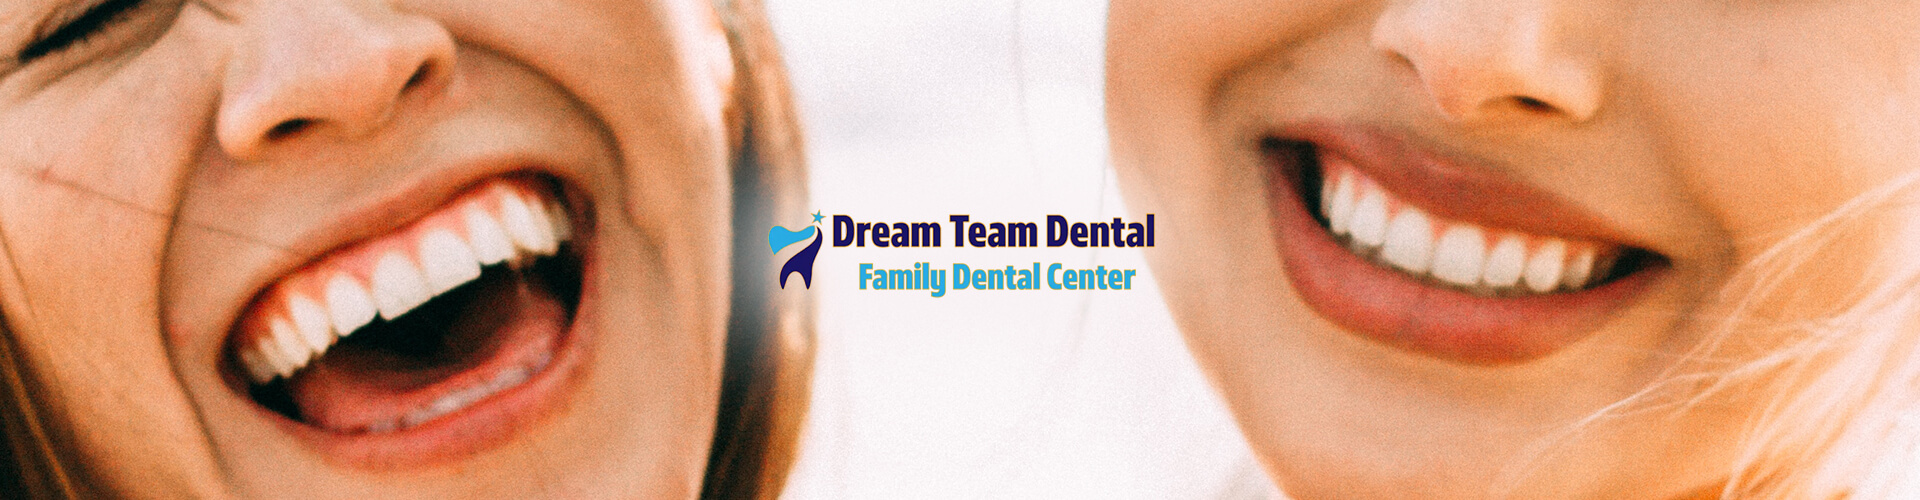 Case Study - Dream Team Dental